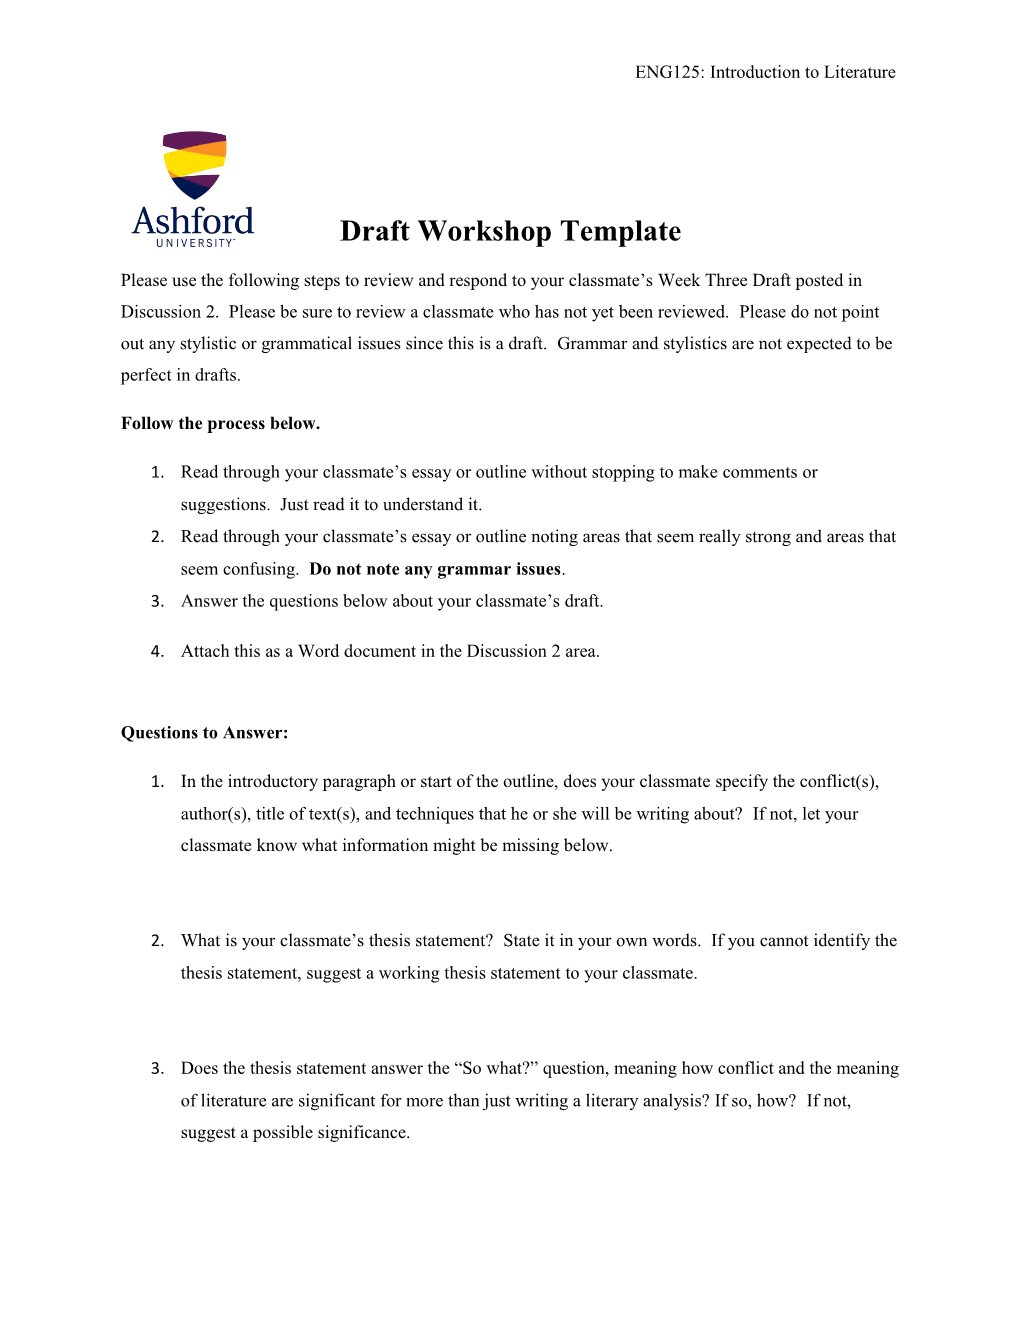 Draft Workshop Template